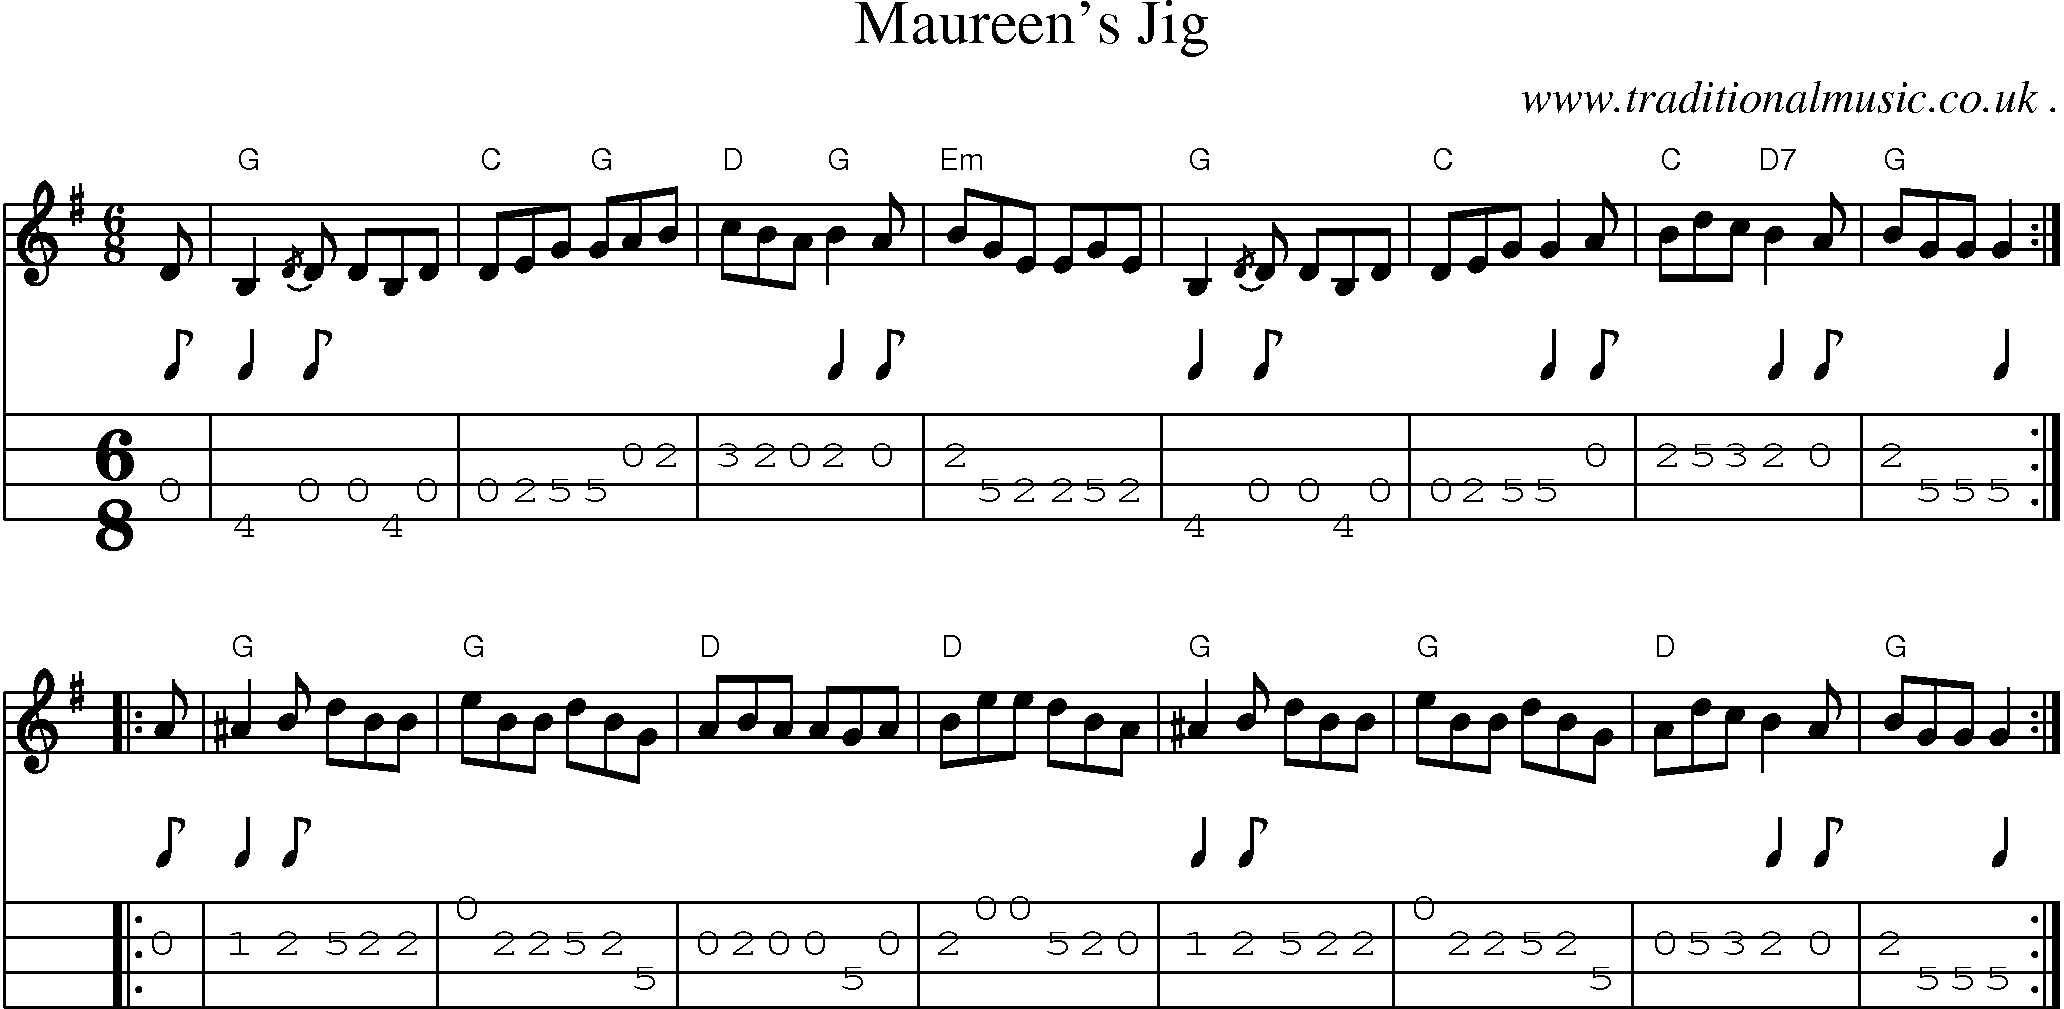 Sheet-music  score, Chords and Mandolin Tabs for Maureens Jig